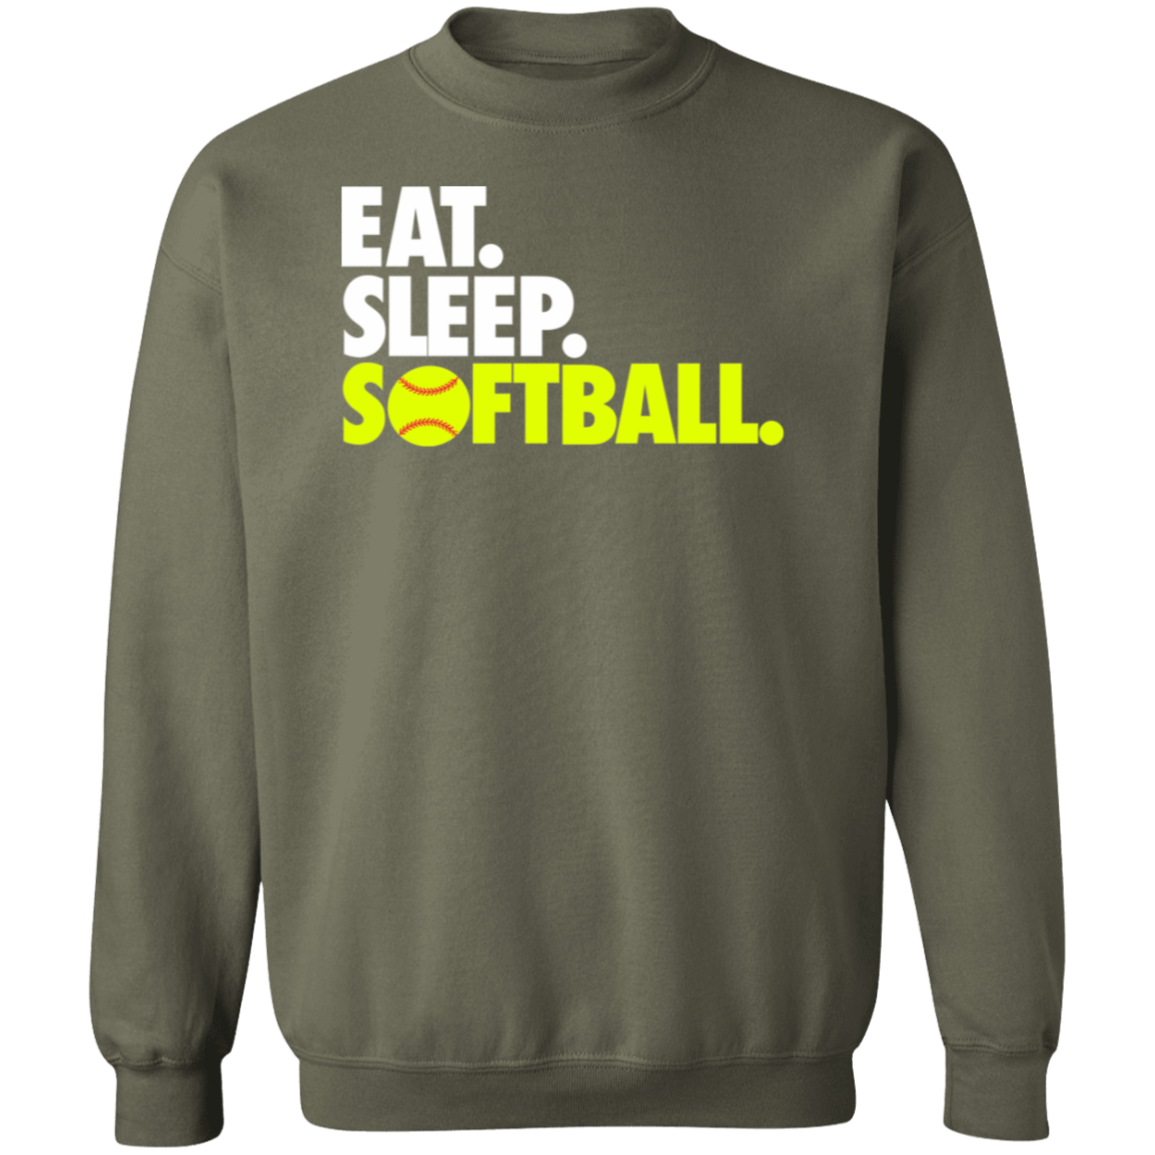 Eat Sleep Softball Premium Crew Neck Sweatshirt - Game Day Getup